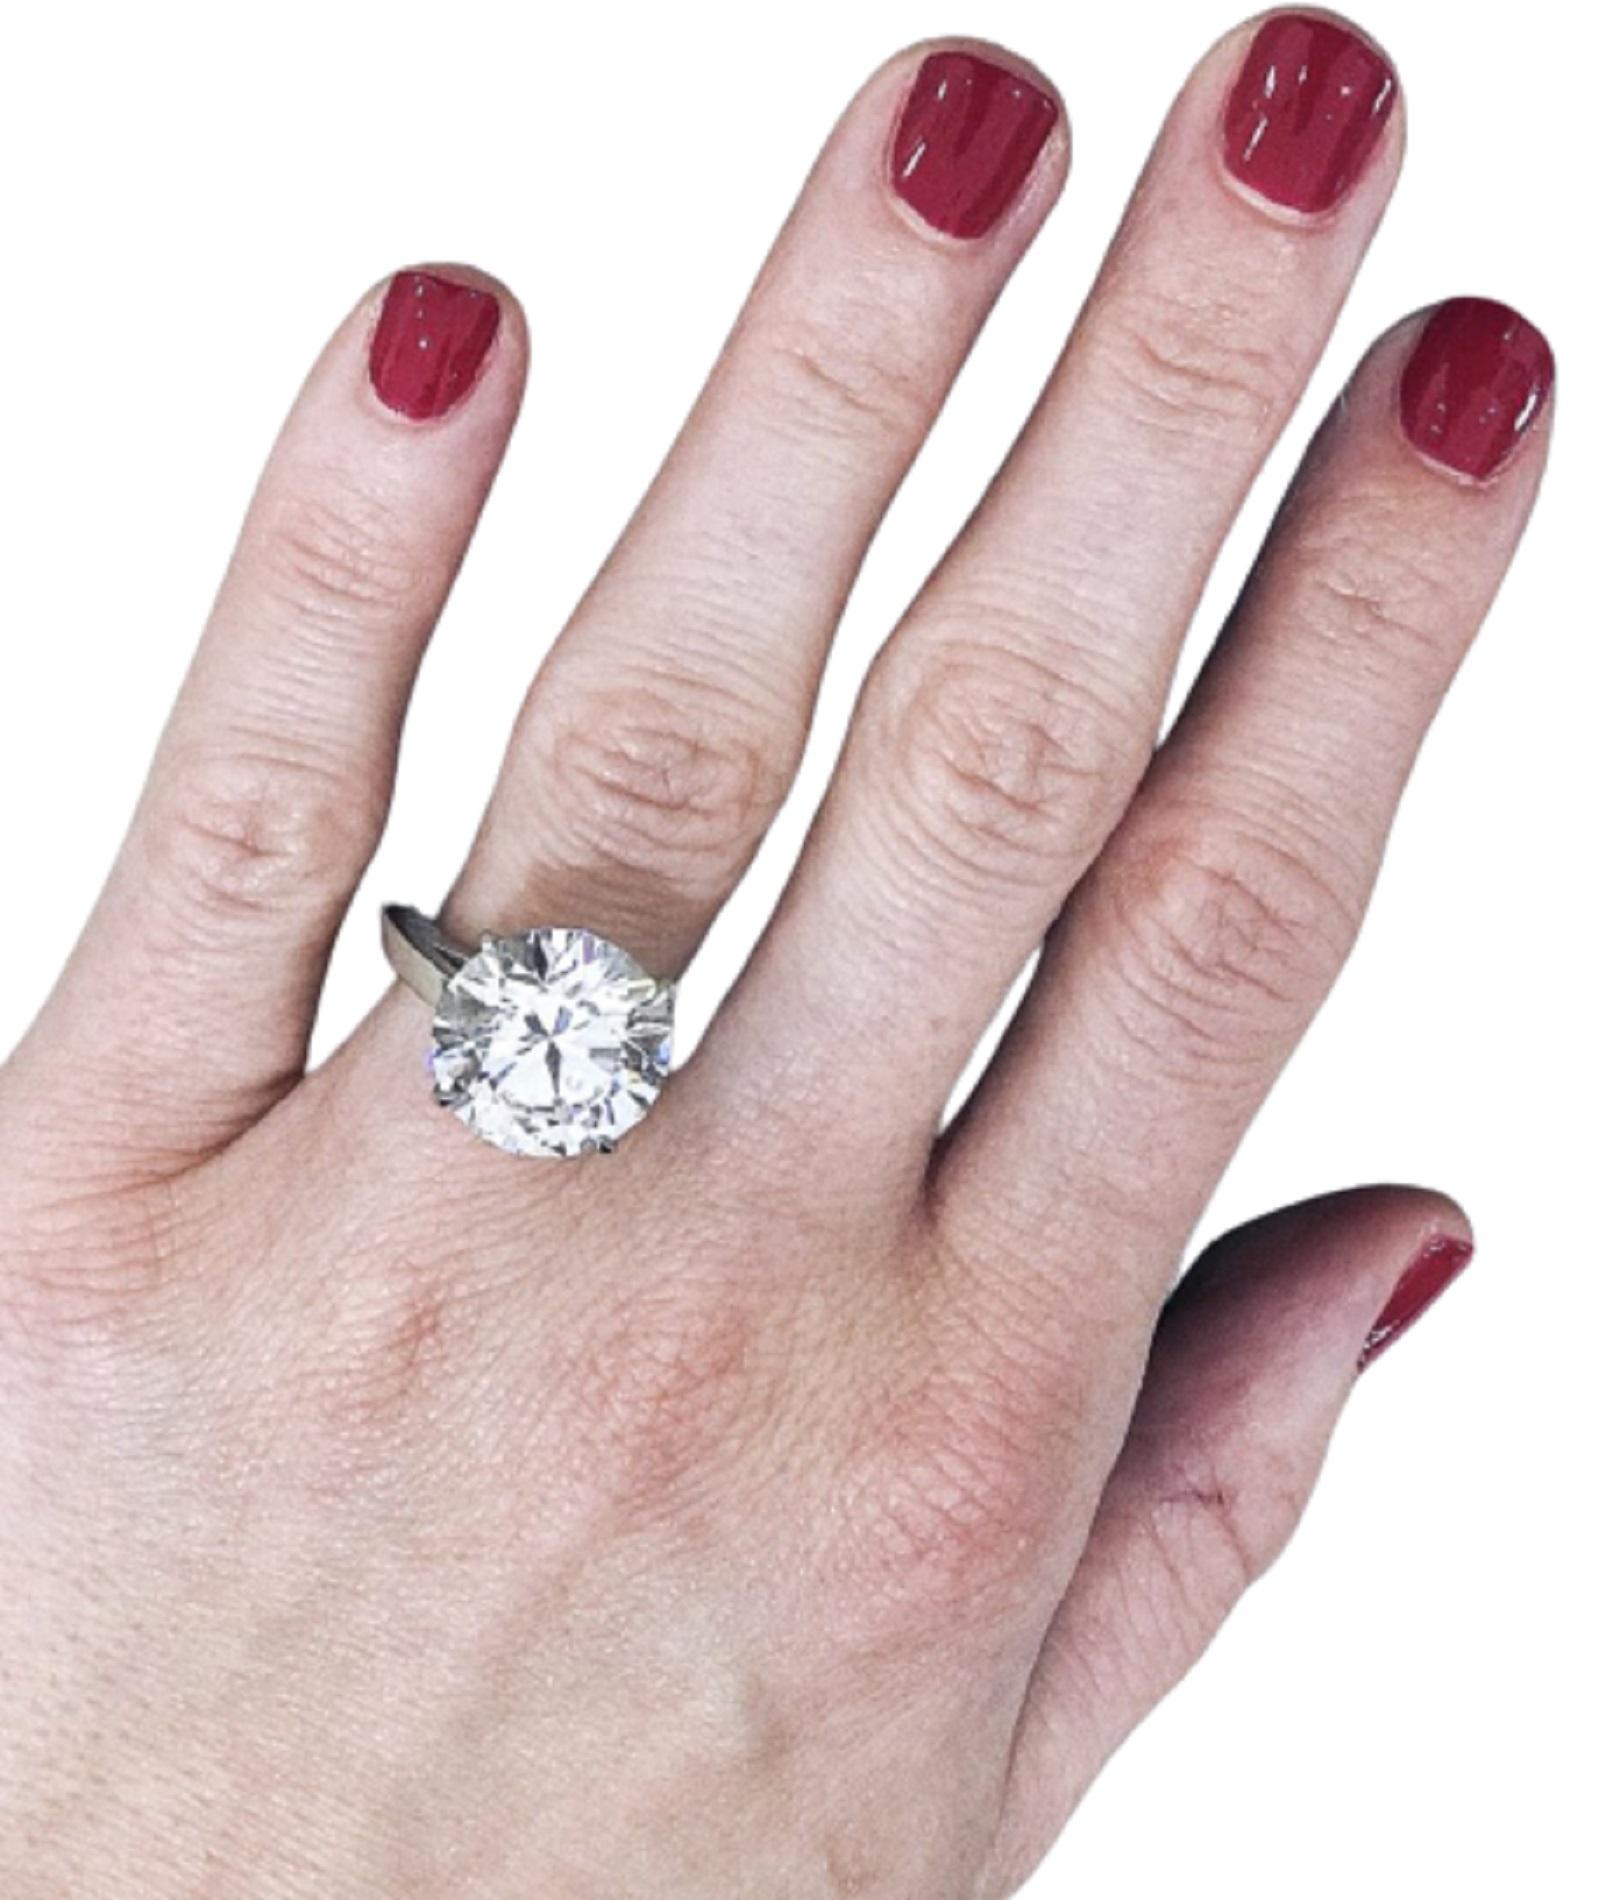 7 carat round diamond ring